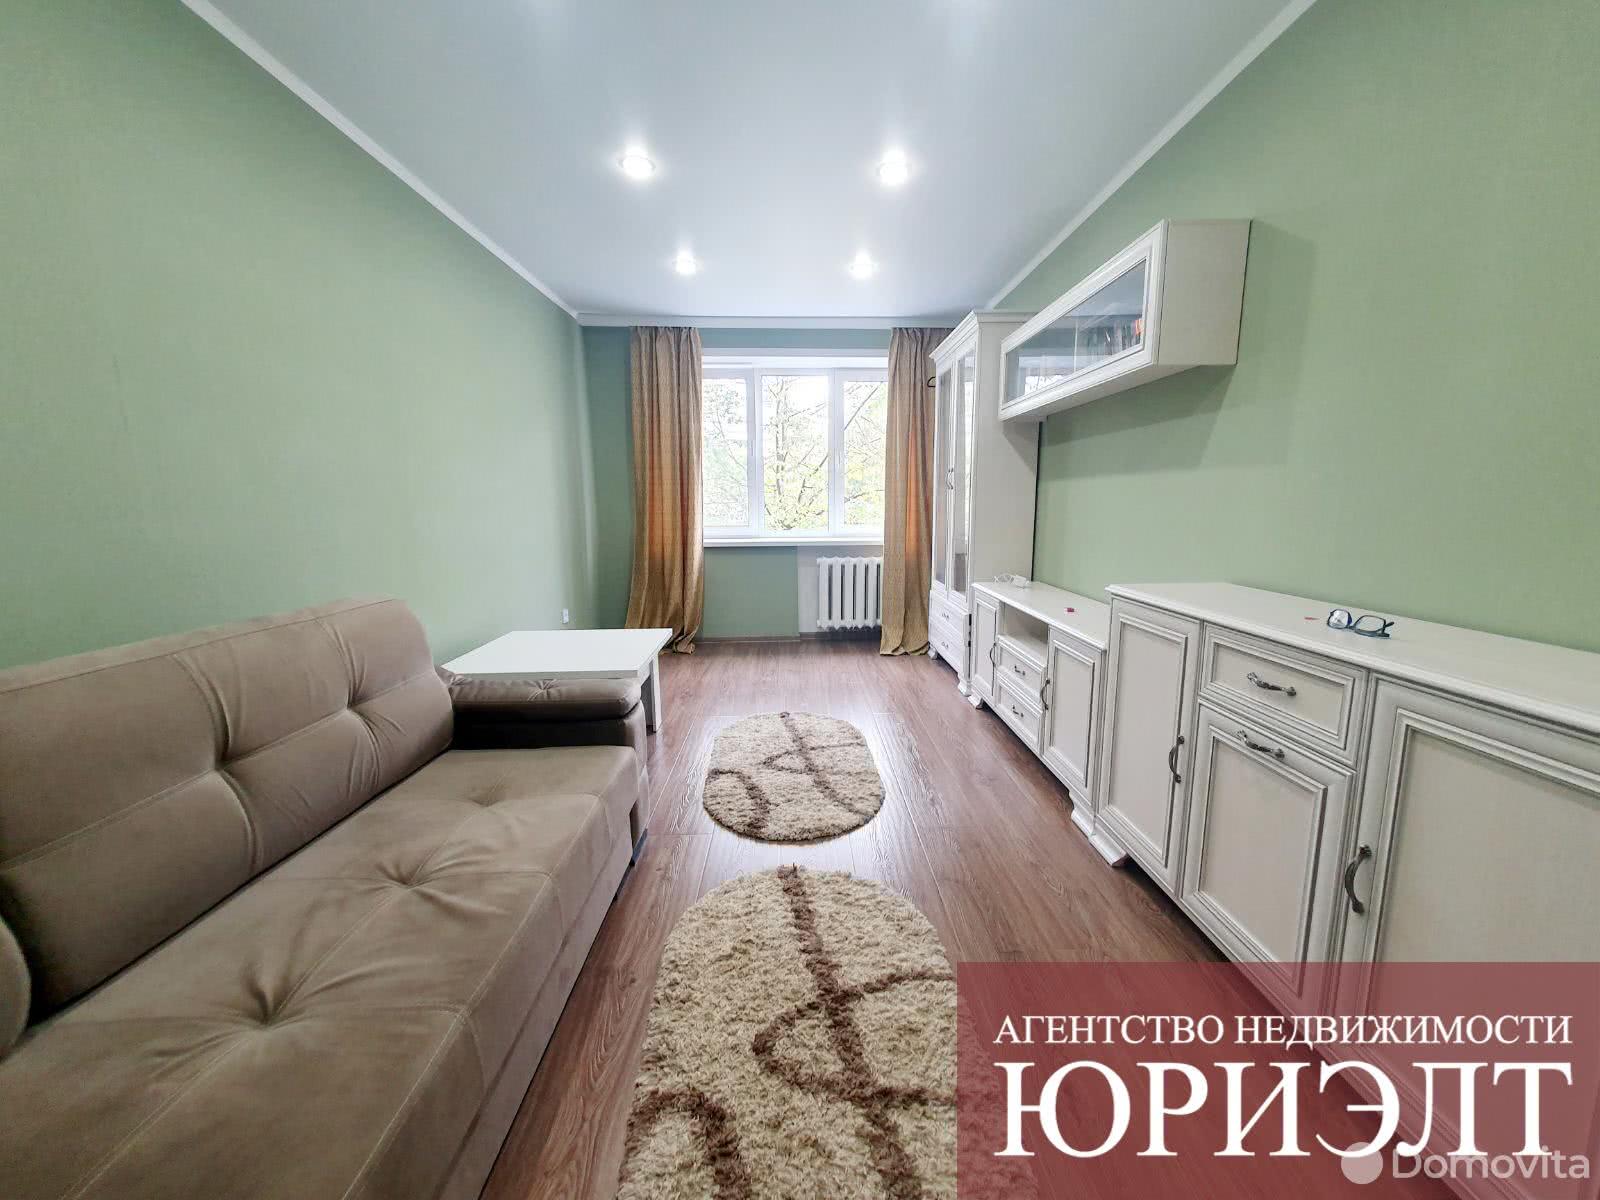 квартира, Брест, ул. Карбышева, д. 100, стоимость продажи 194 904 р.